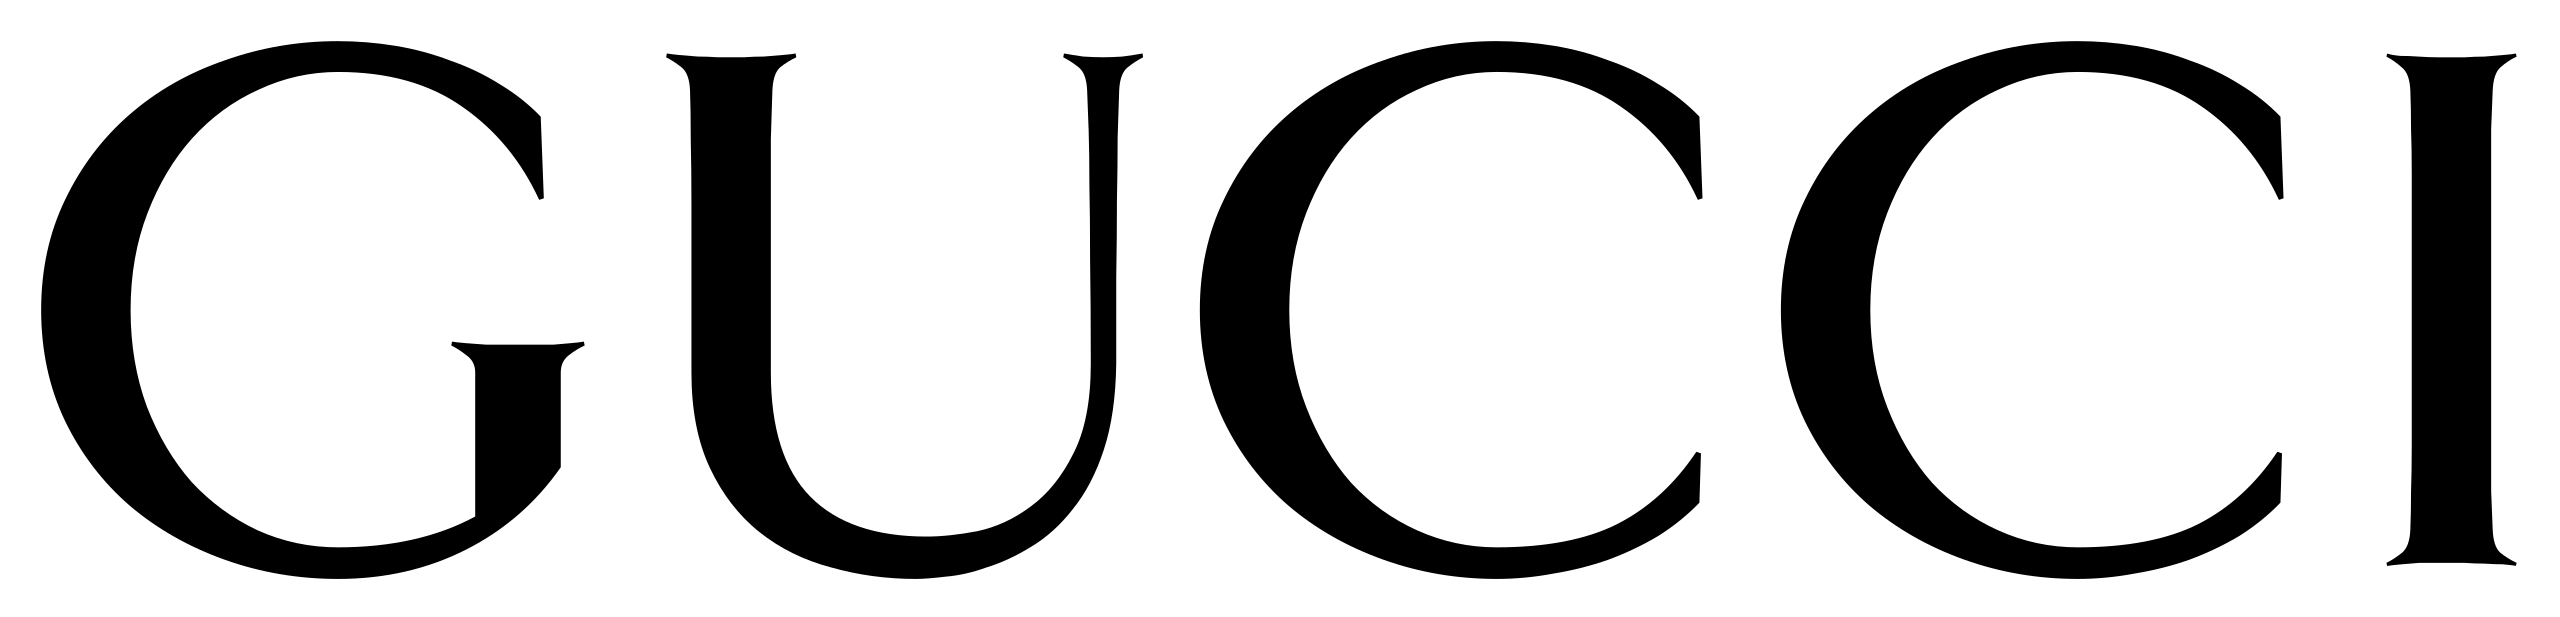 Логотип Gucci